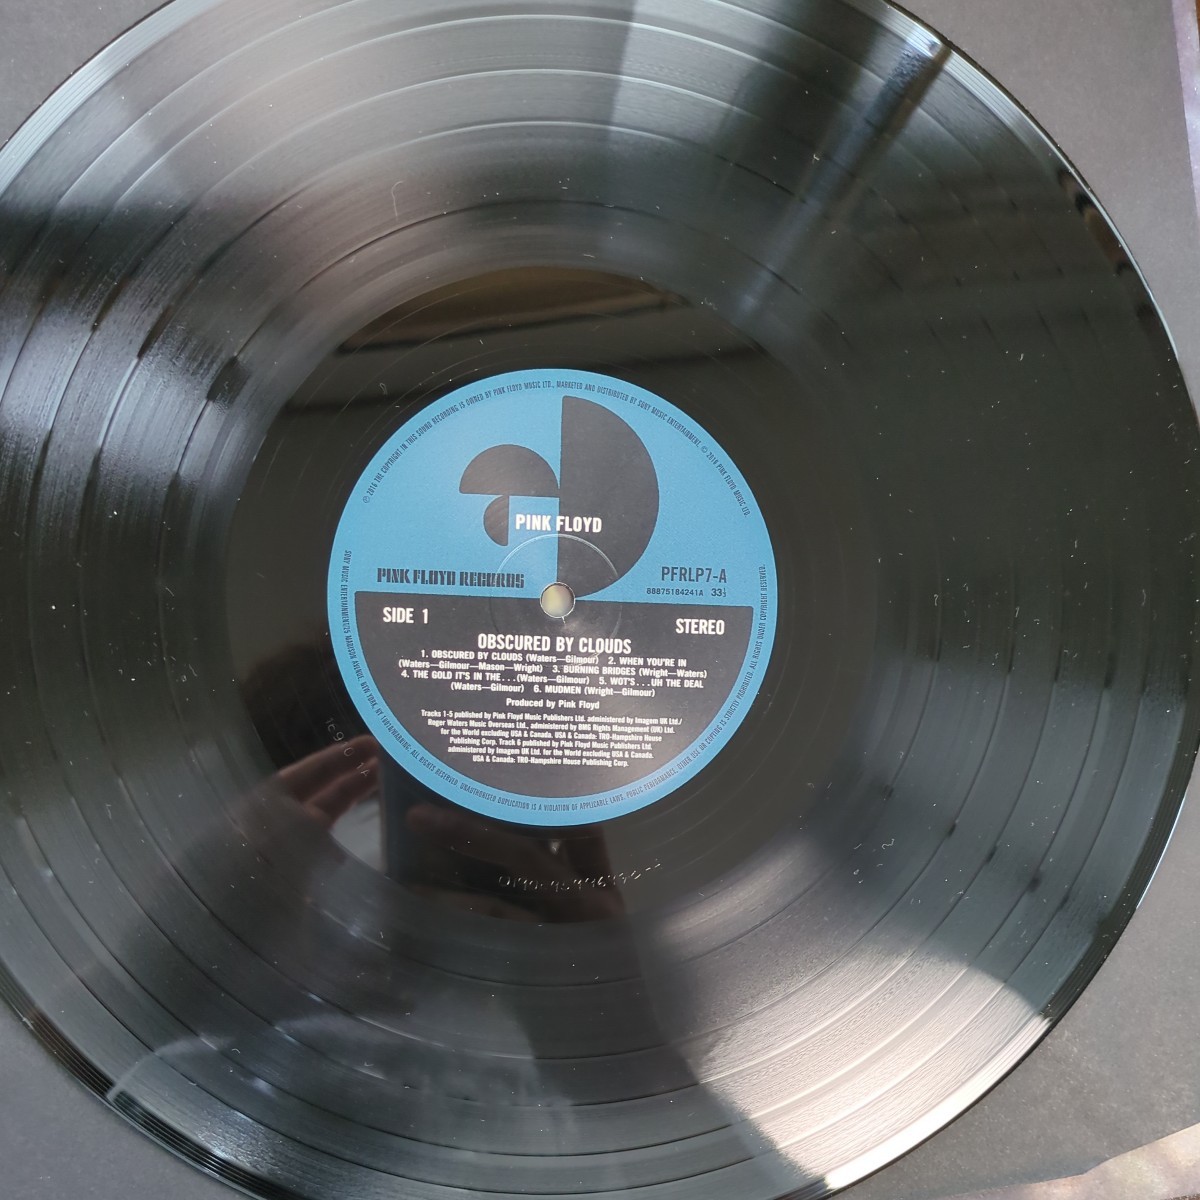 BGカット PINK FLOYD 雲の影 ピンク・フロイド obscured by clouds analog record レコード LP アナログ vinyl_画像5